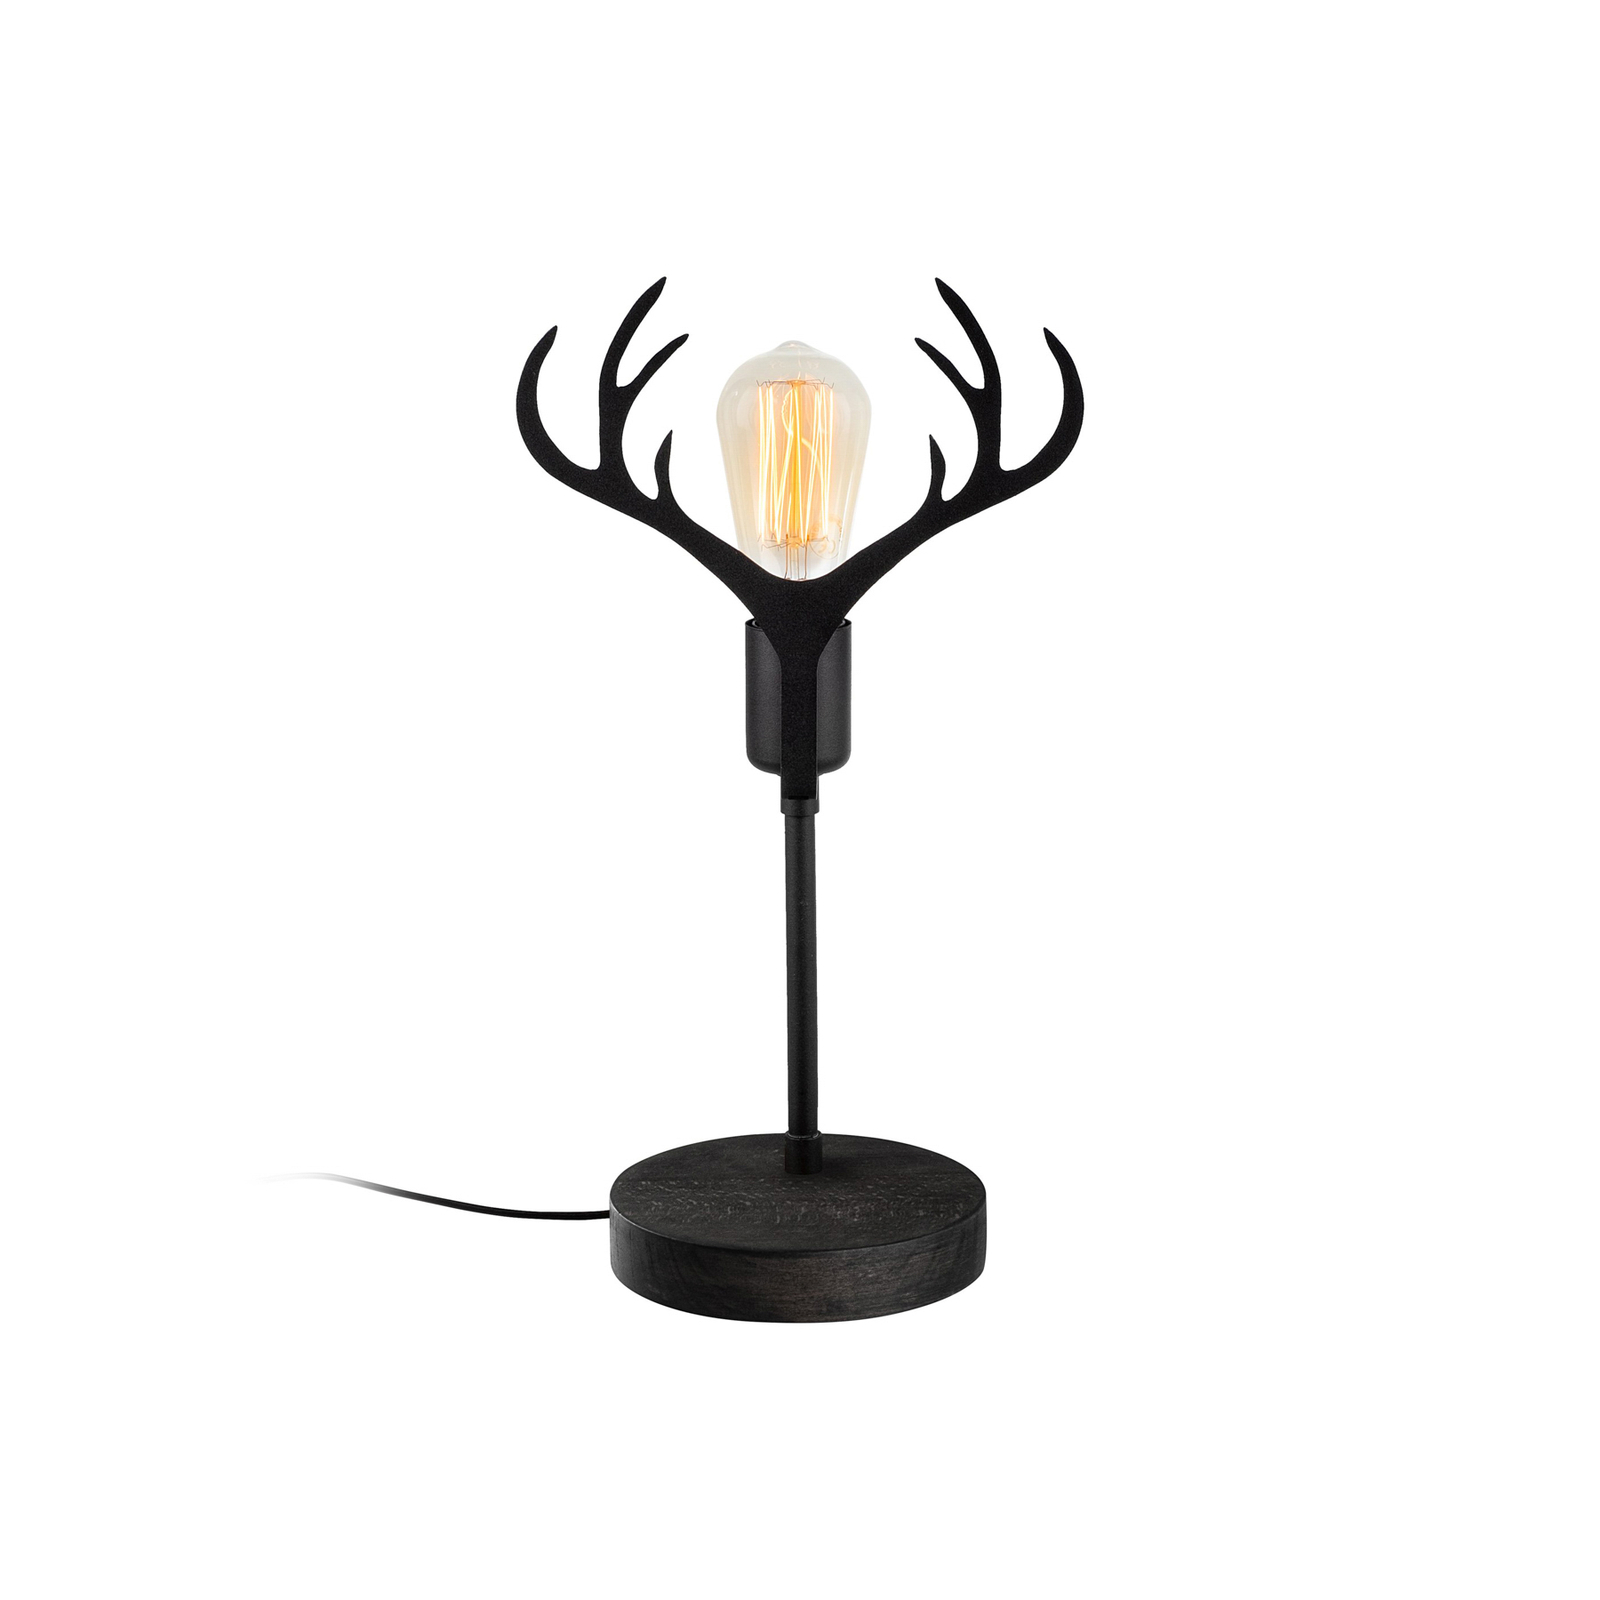 Stolna lampa GMN-000011 crni jelenji rogovi